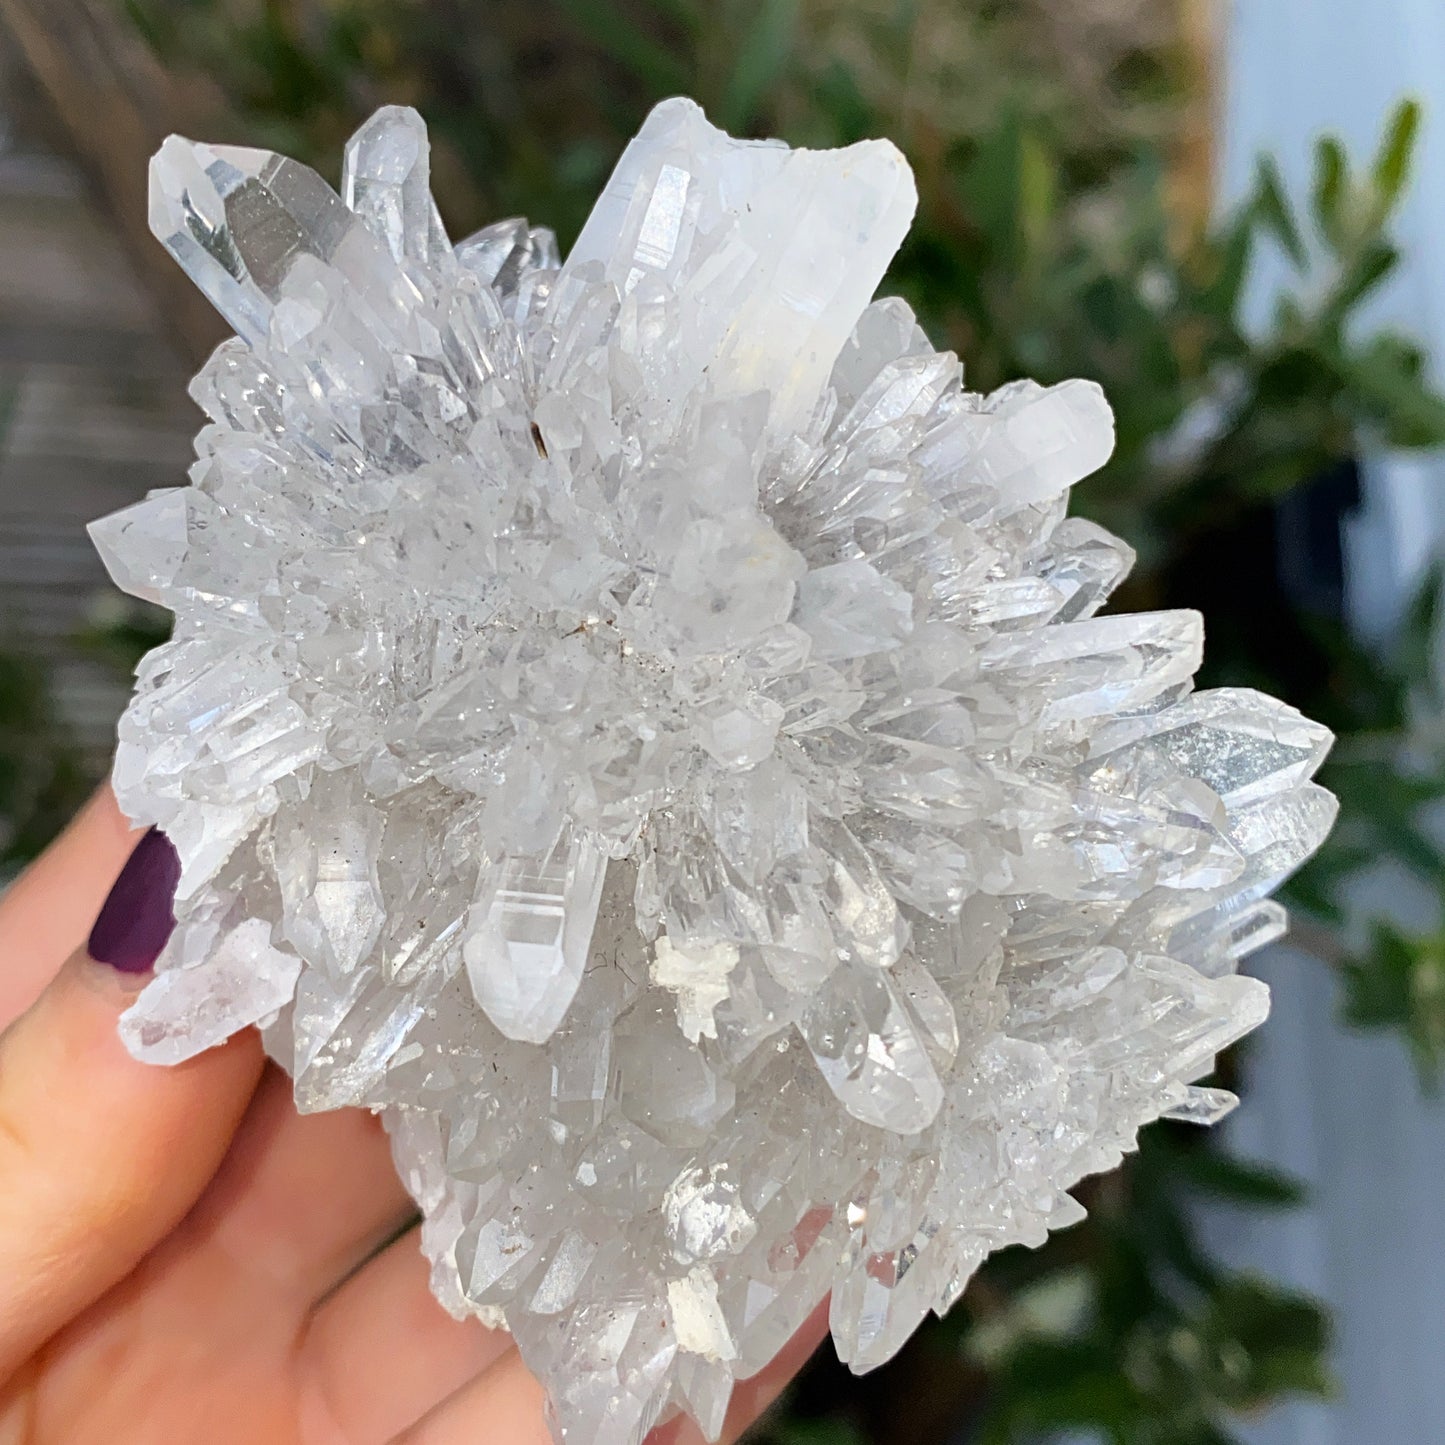 Crystal Clear Quartz Cluster - 197g